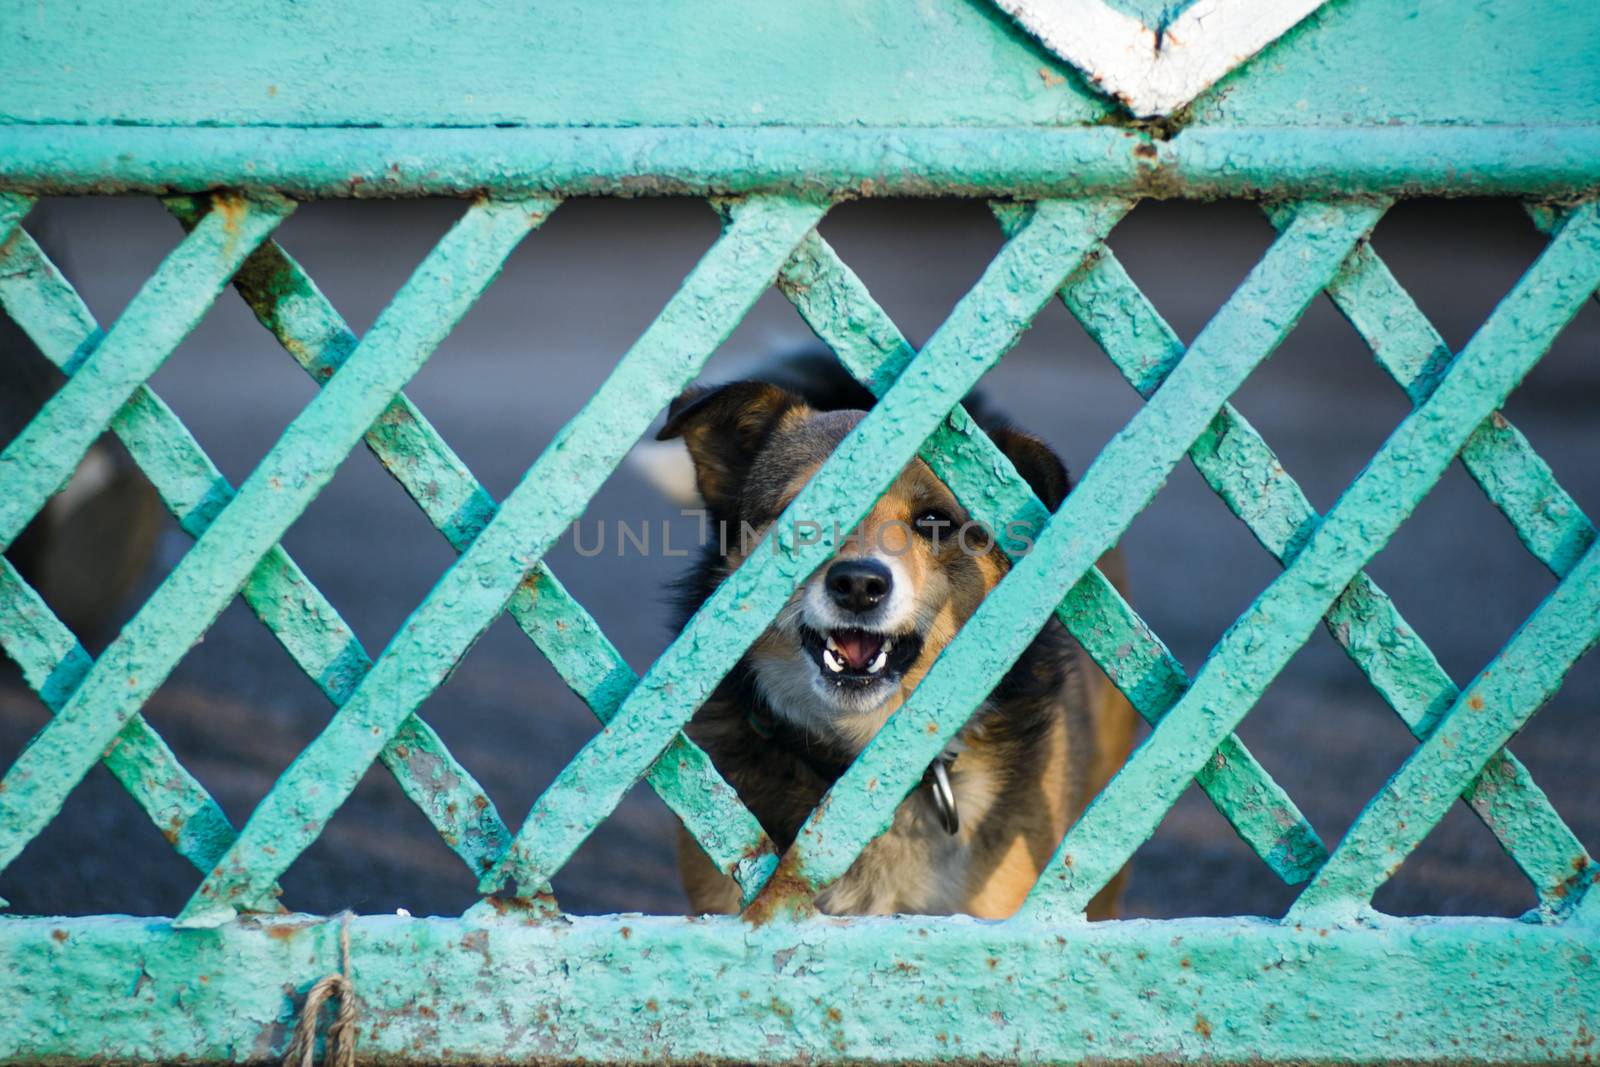 A dog barks through a green wooden fence